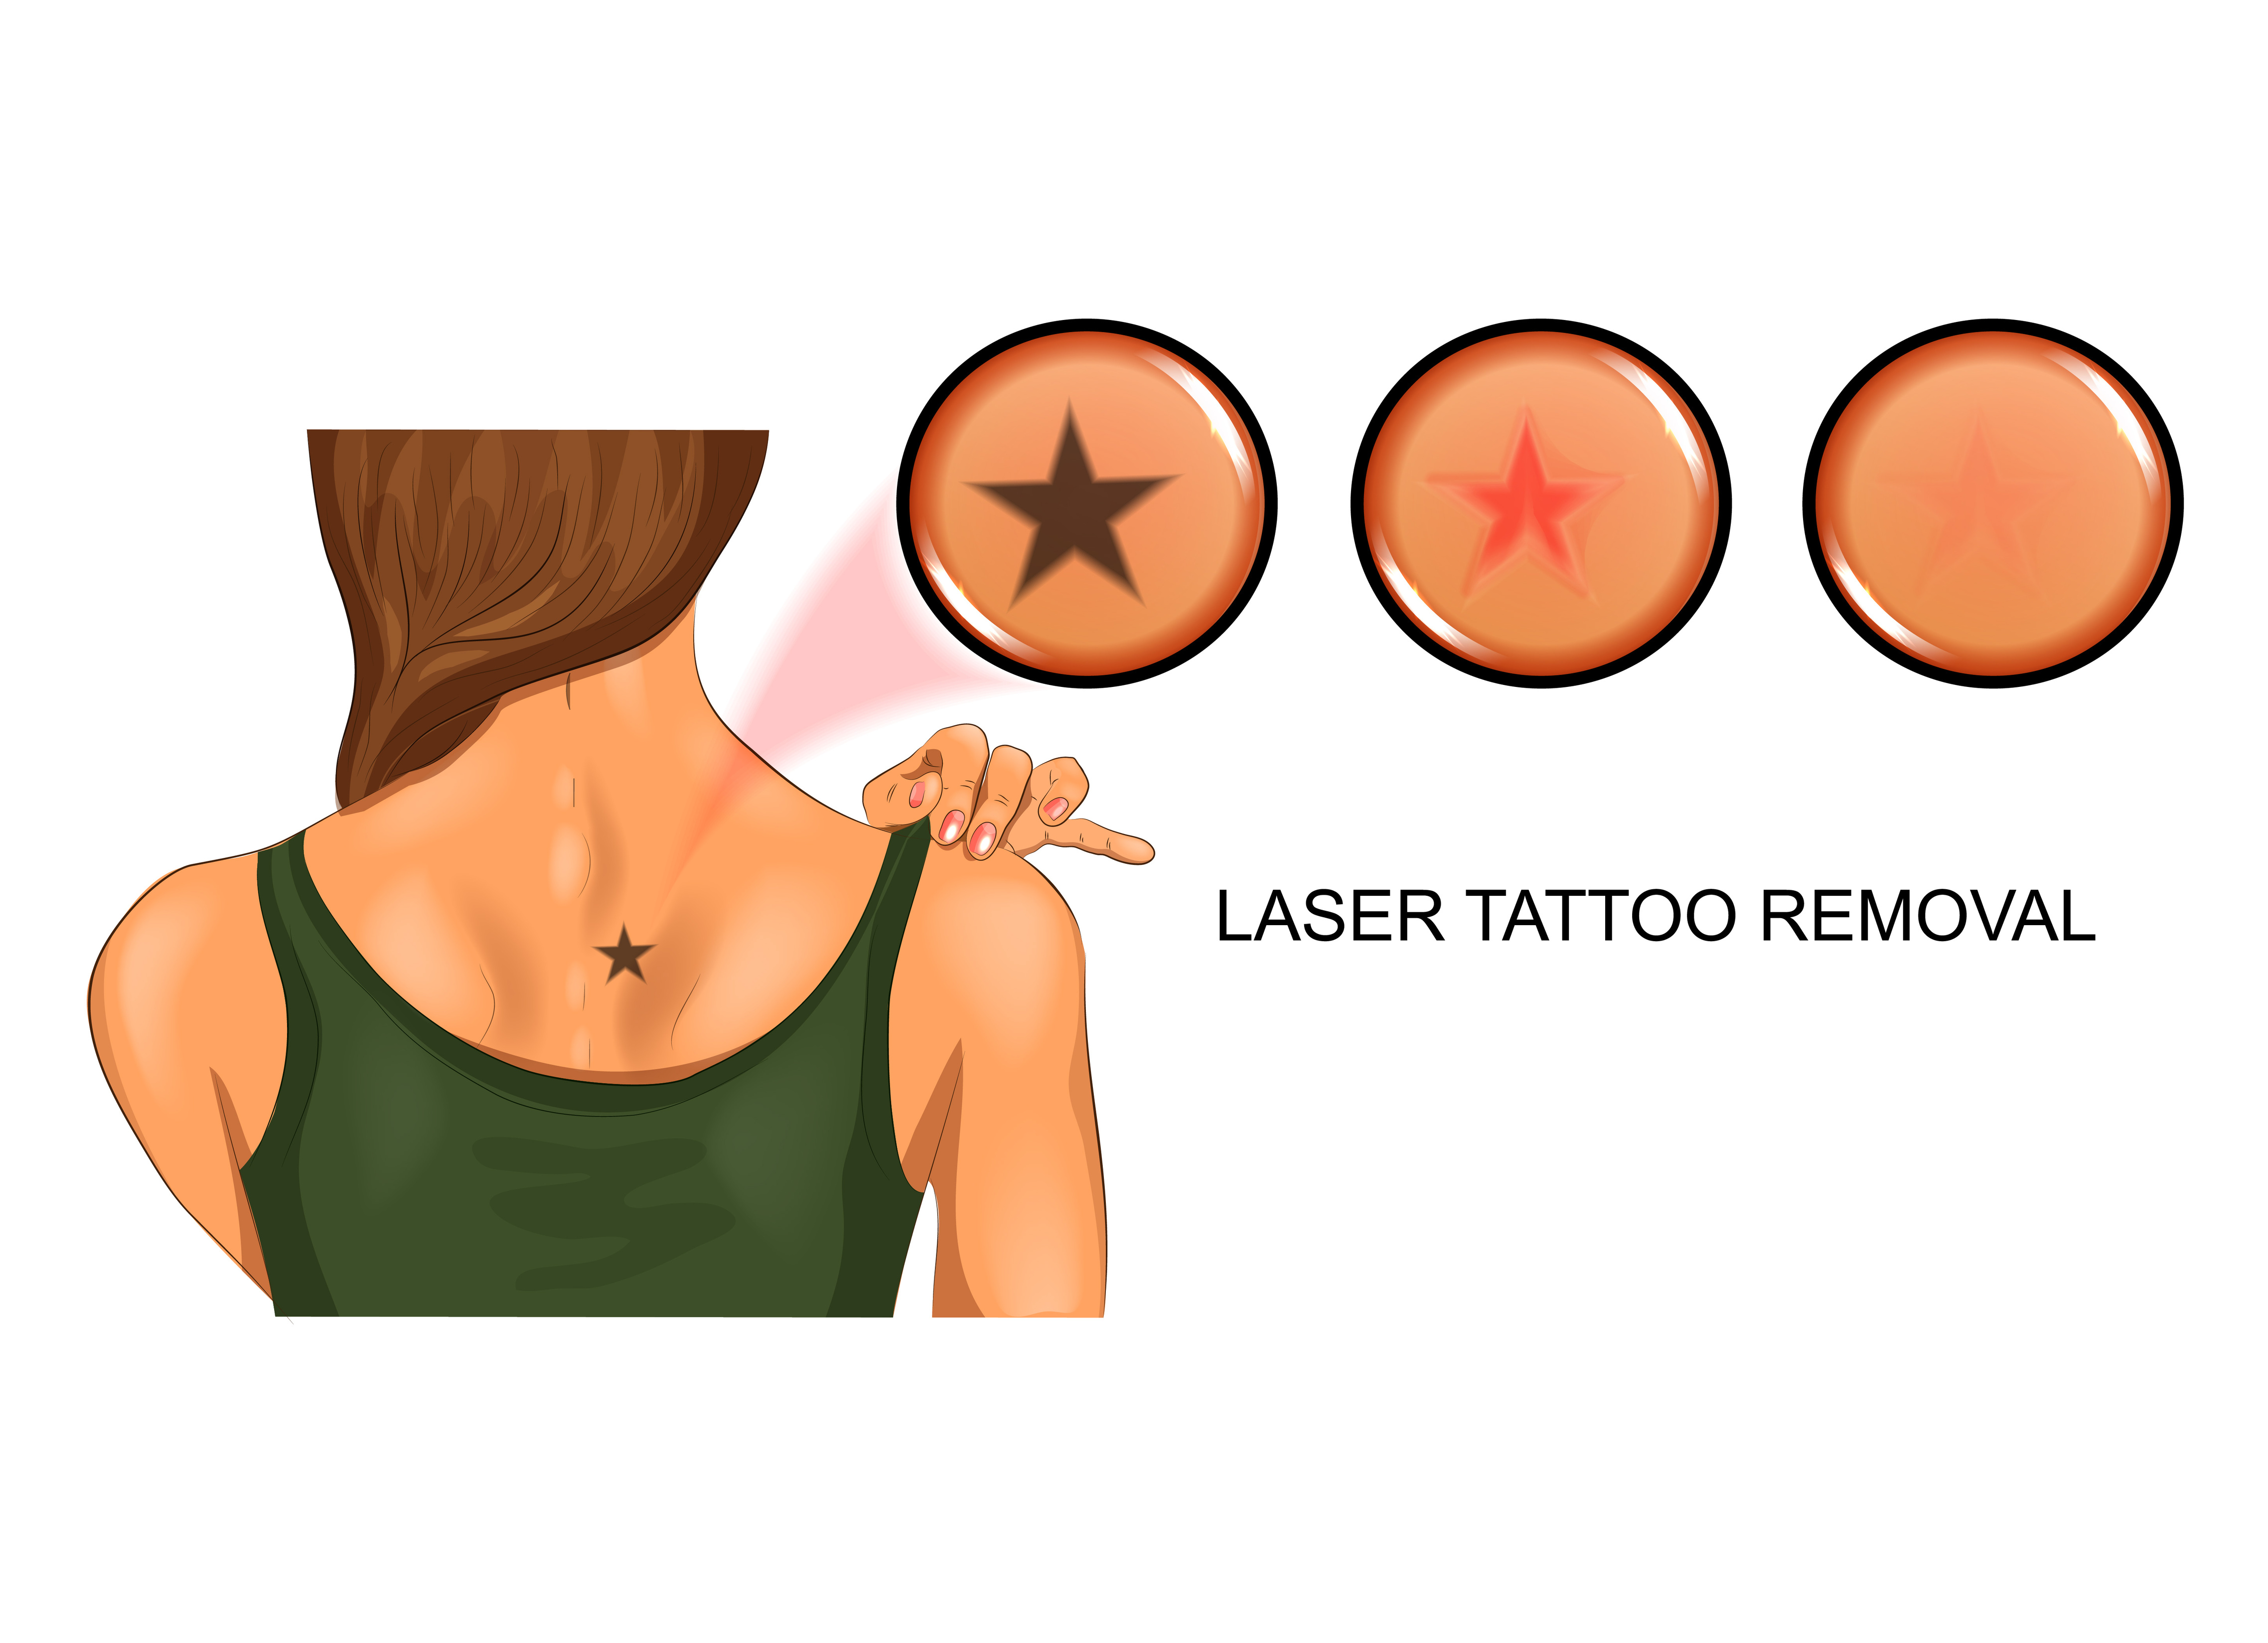 Laser Tattoo Removal Treatment in Pune लजर टट रमवल टरटमट पण